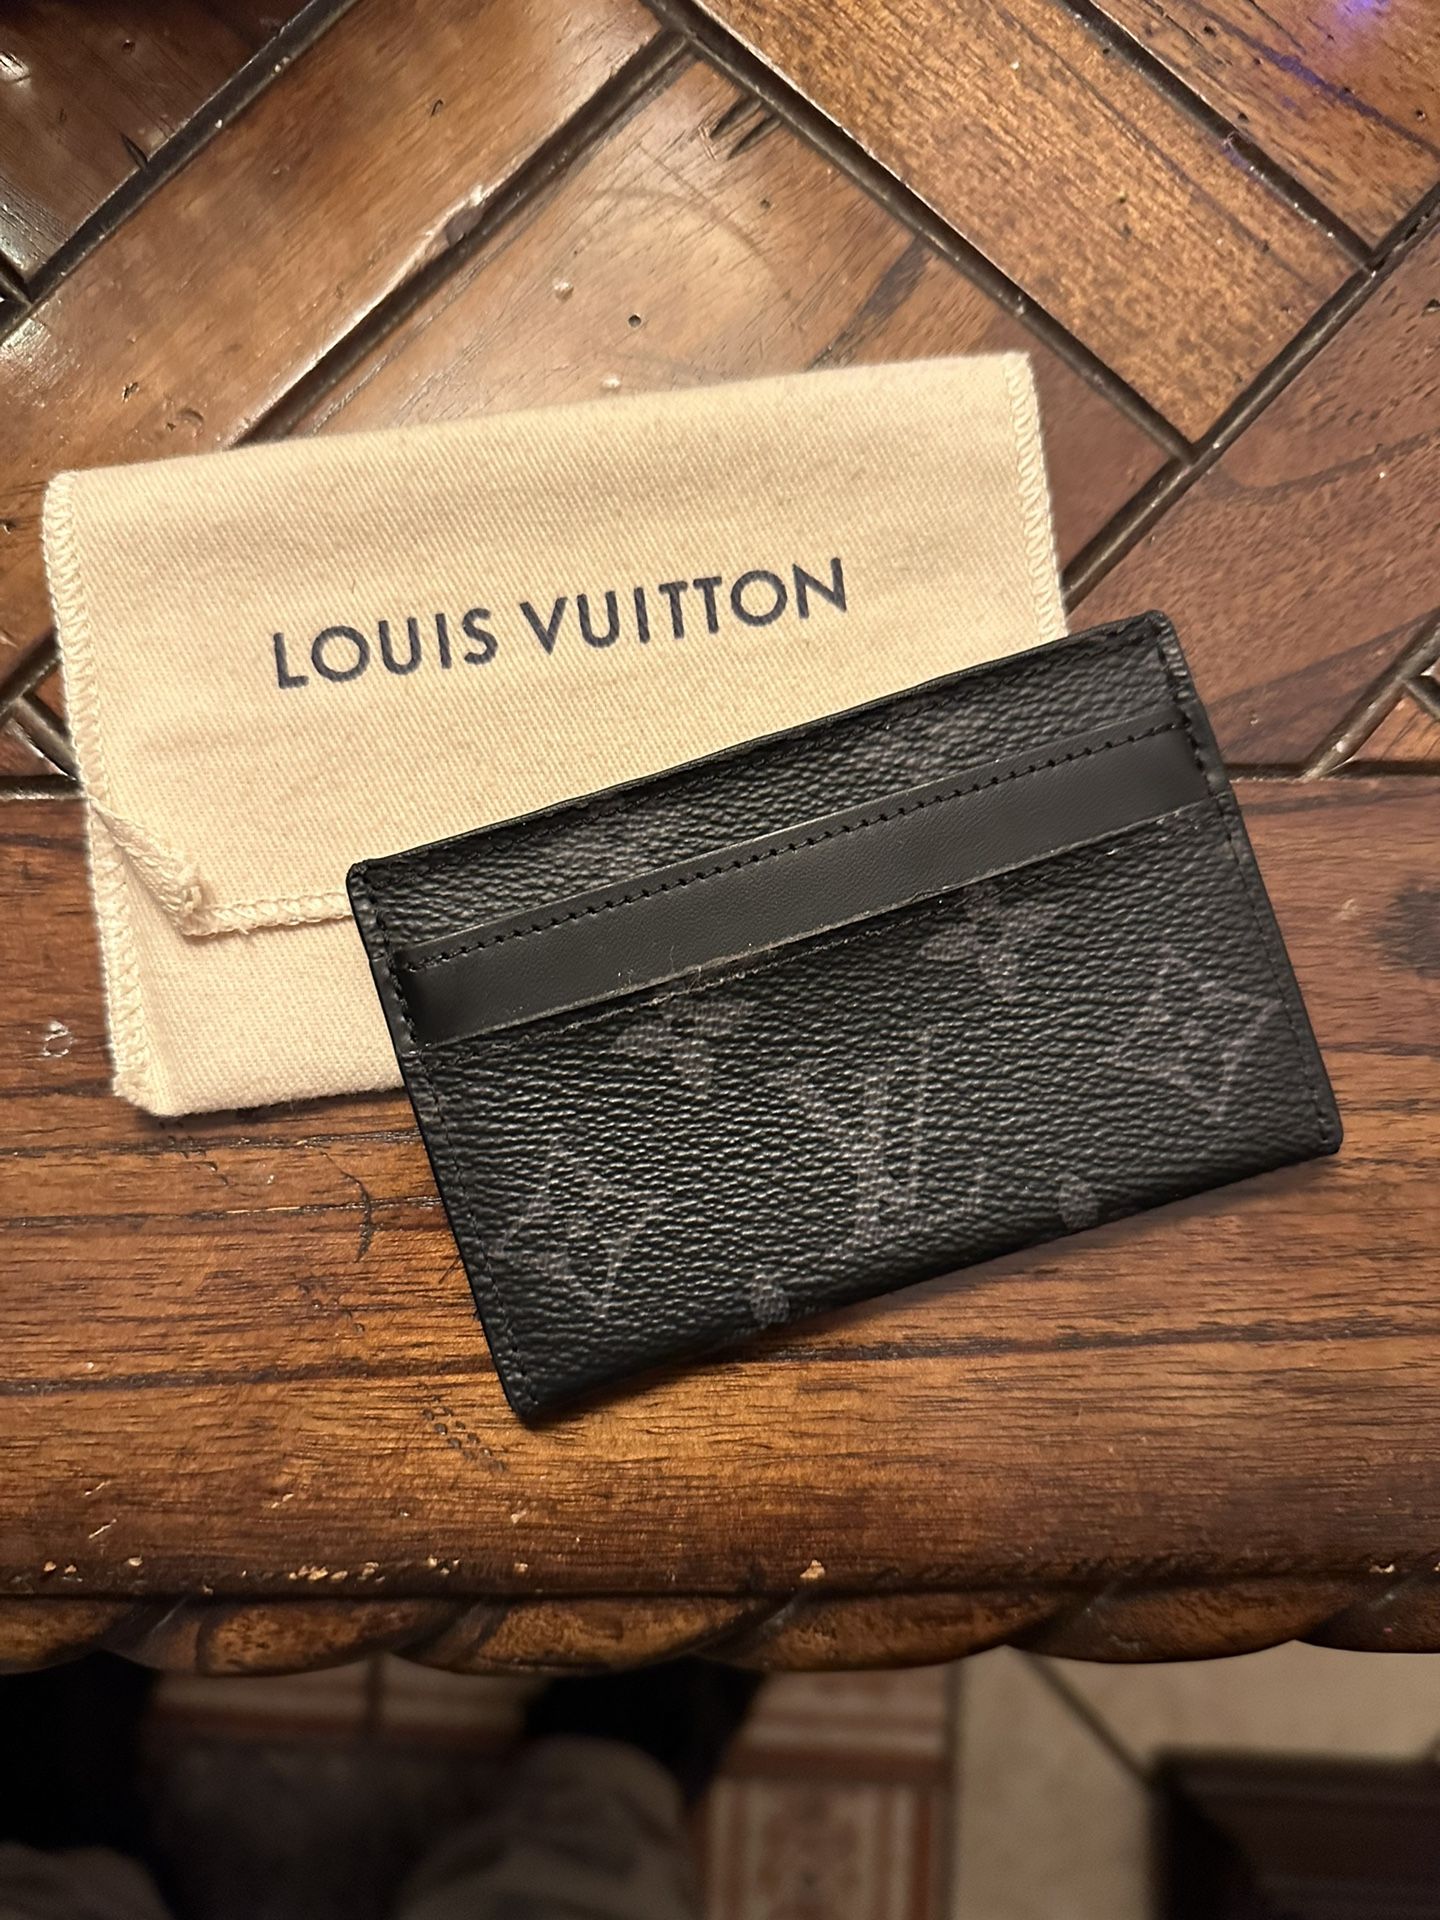 Louis Vuitton Shopping Bag for Sale in San Antonio, TX - OfferUp